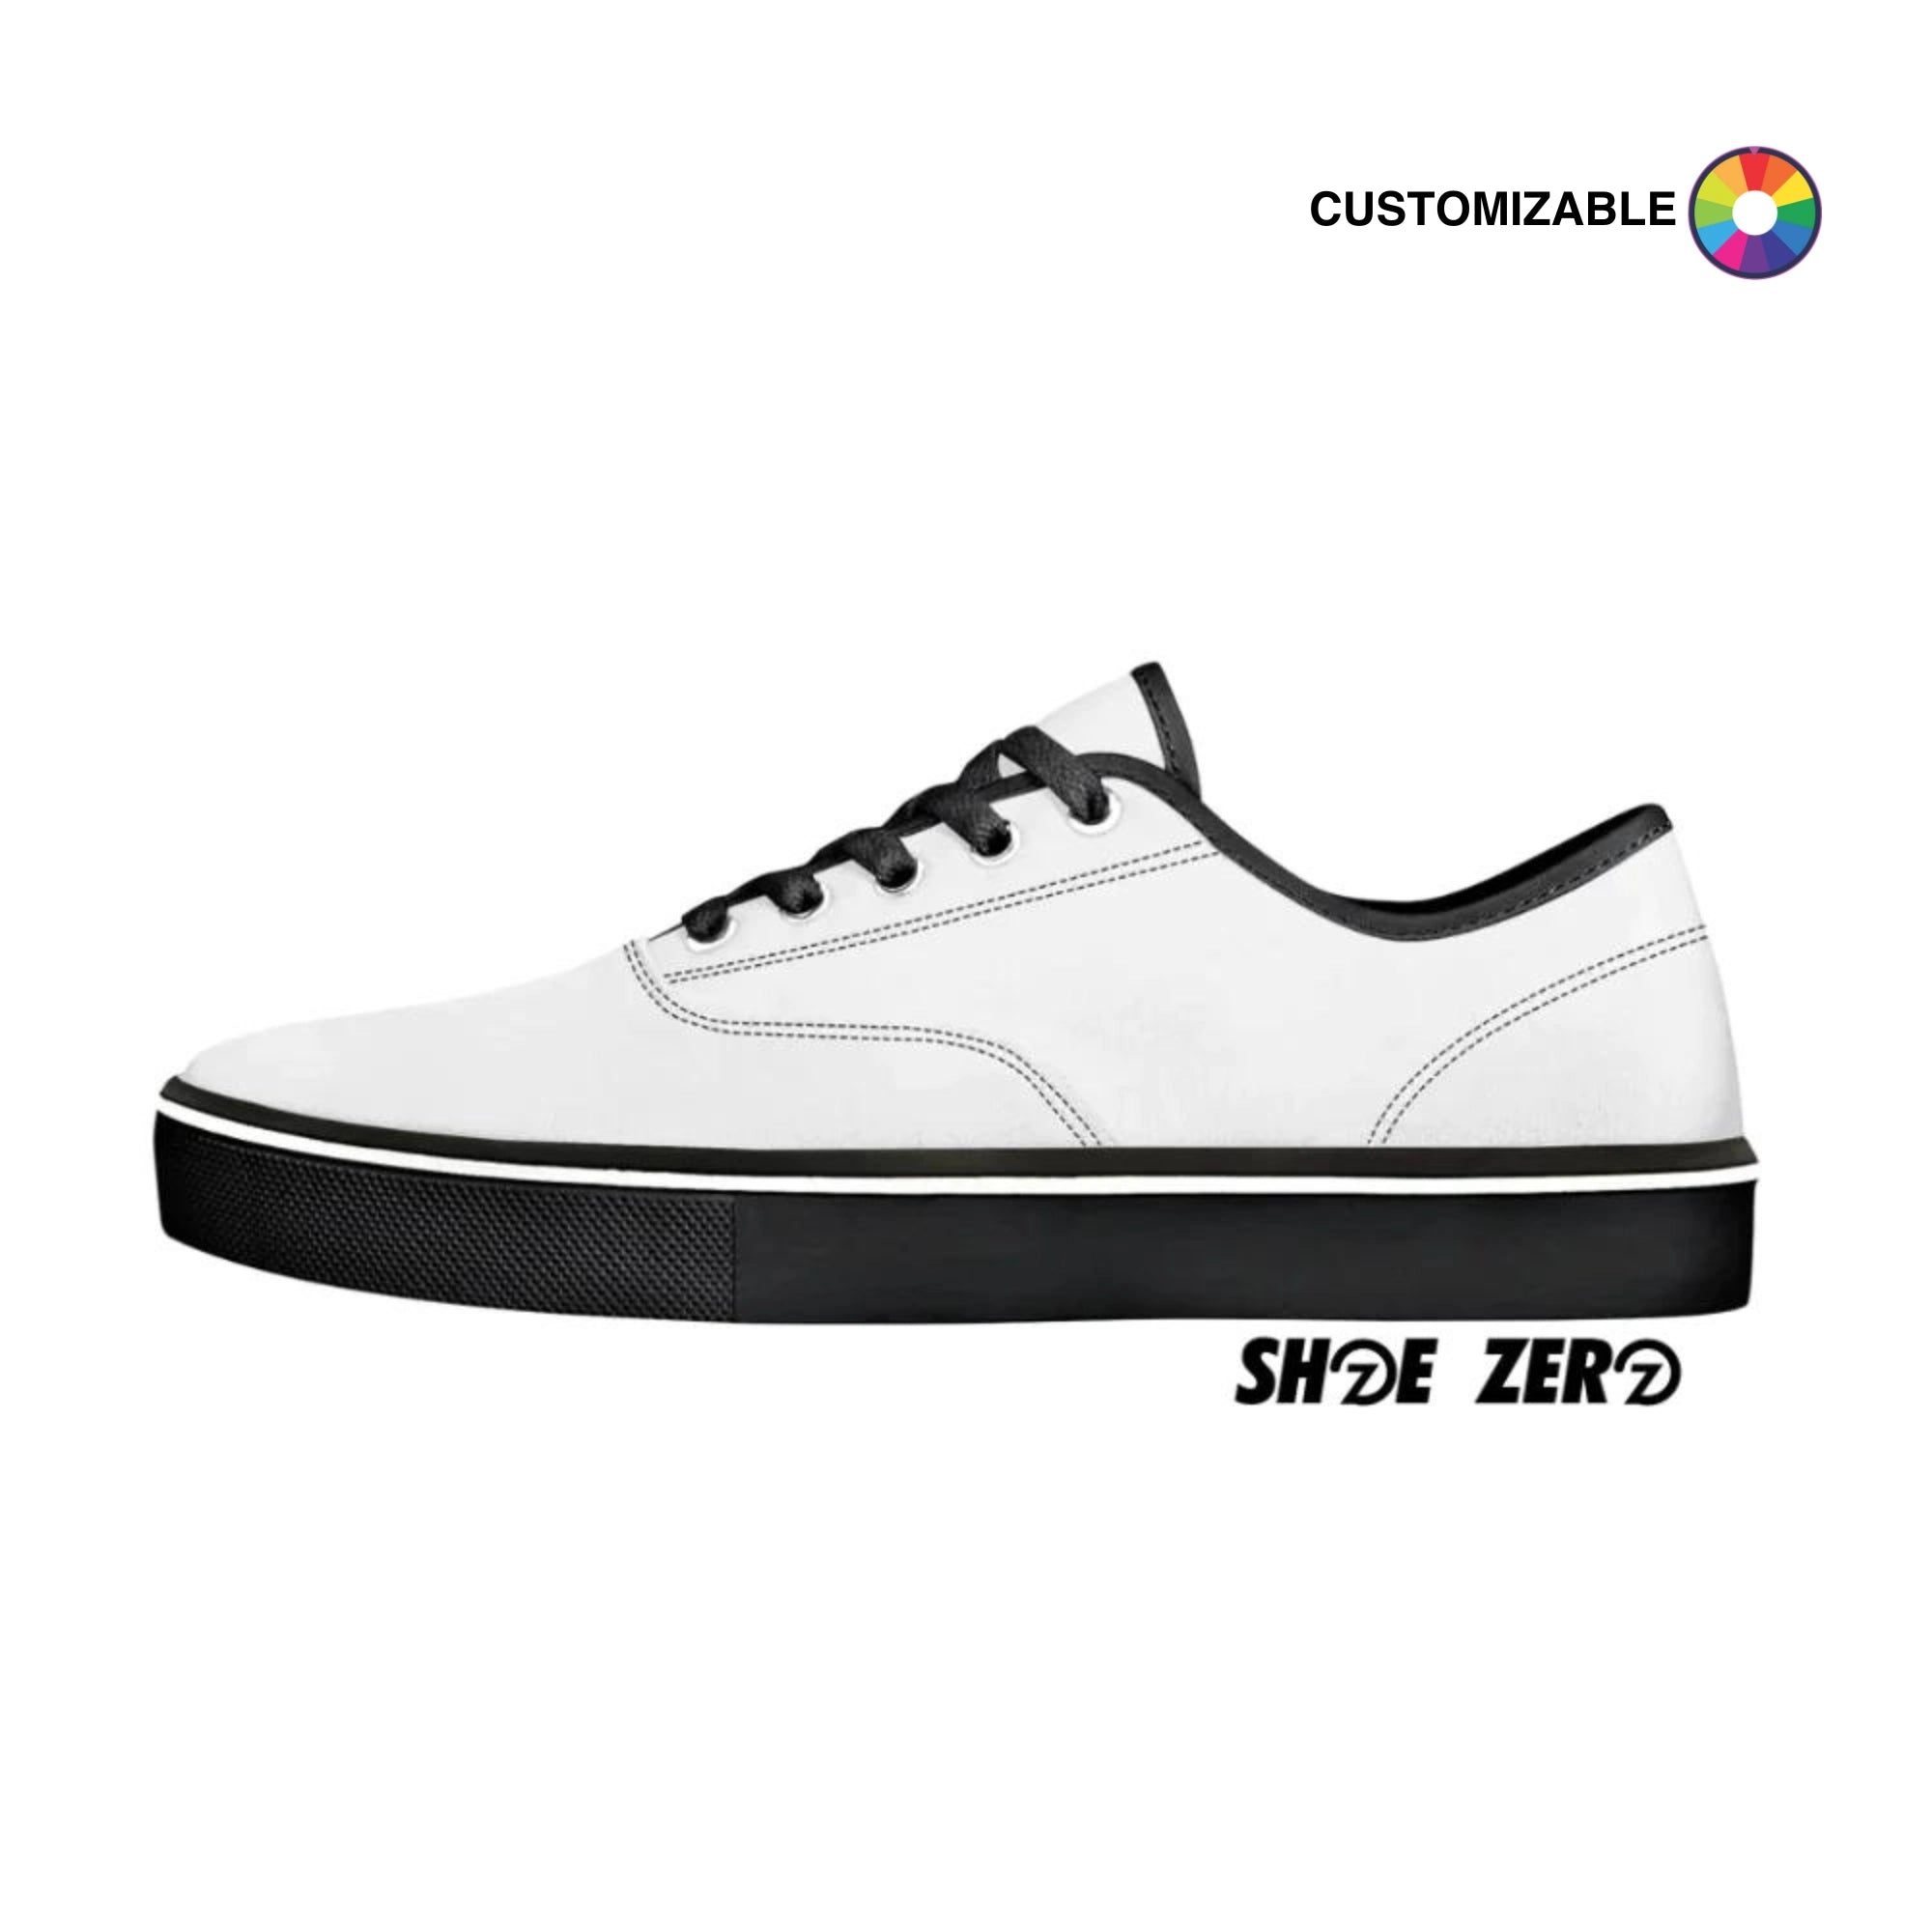 Customizable Skate Shoe - Black | Design your own | Shoe Zero